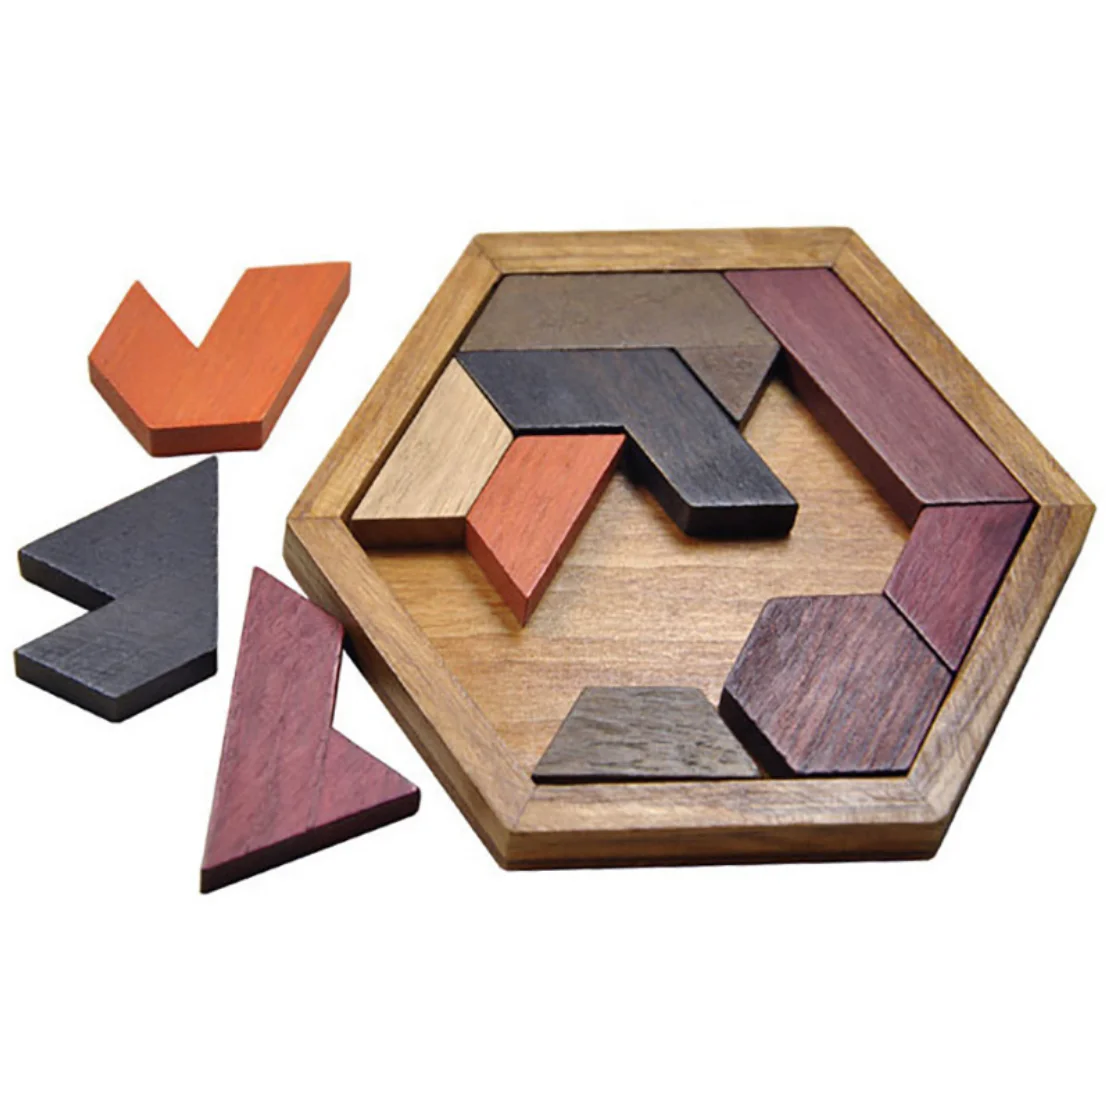 IQ Pattern Shapes Puzzle Box Wooden Blocks Montessori Kids Educational Toys 